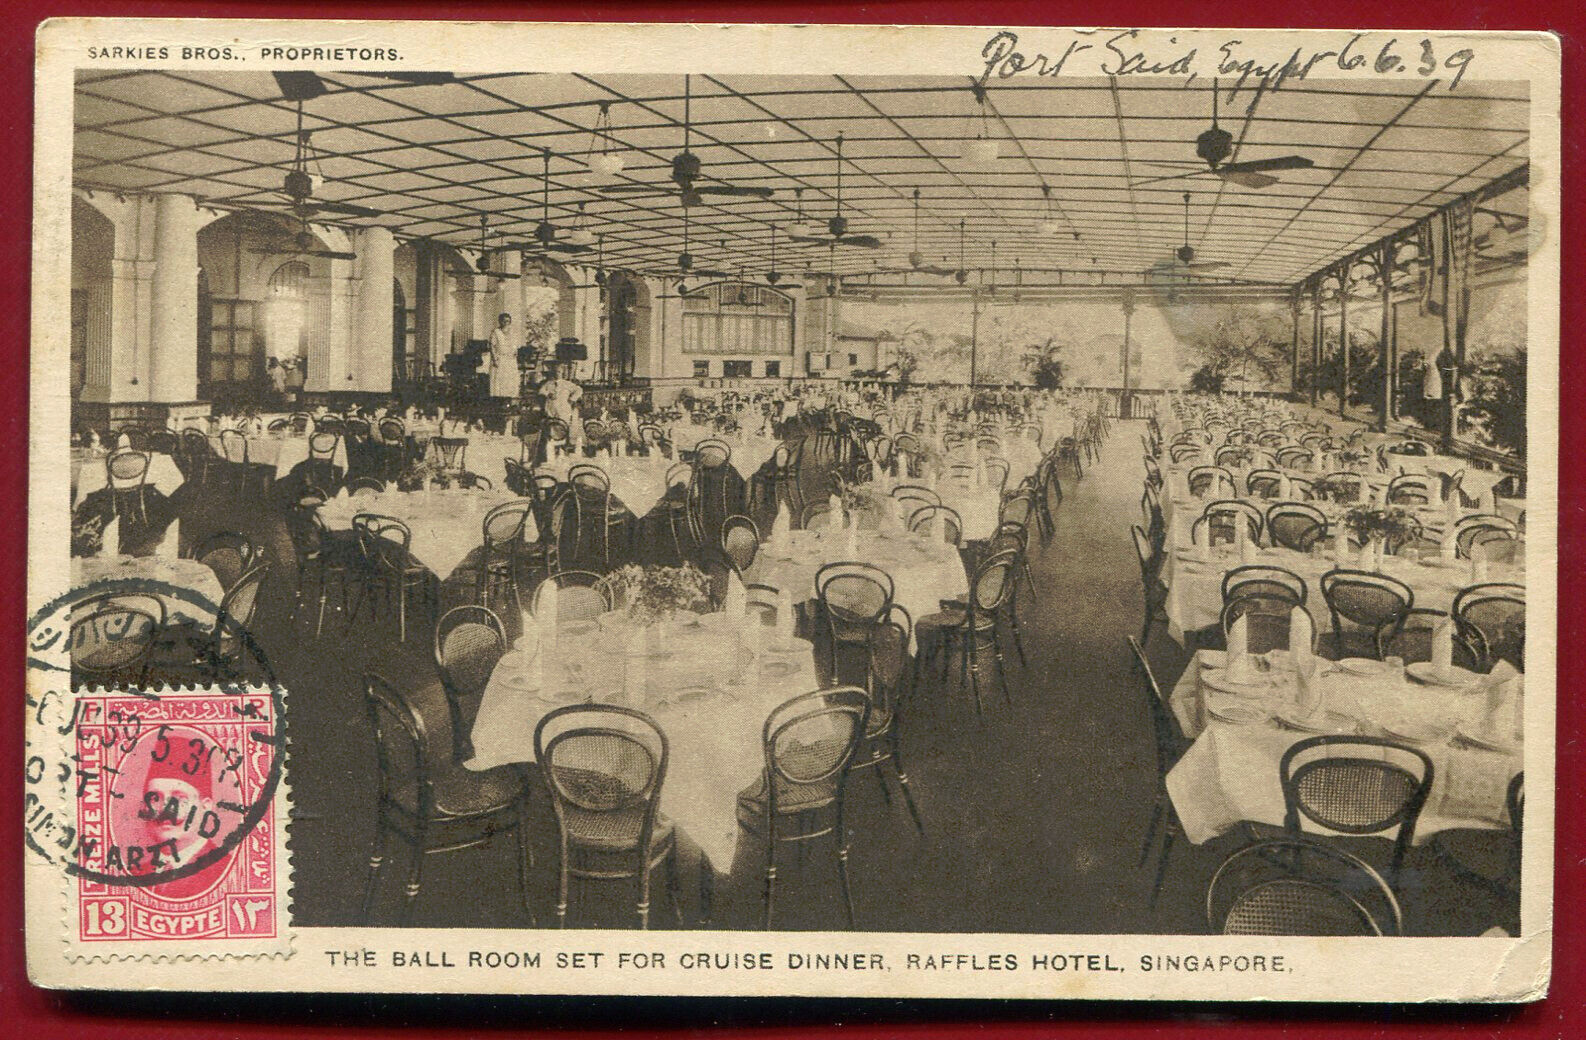 Raffles Hotel Ball Room for Cruise Dinner Singapore posted Port Said Egypt 1939